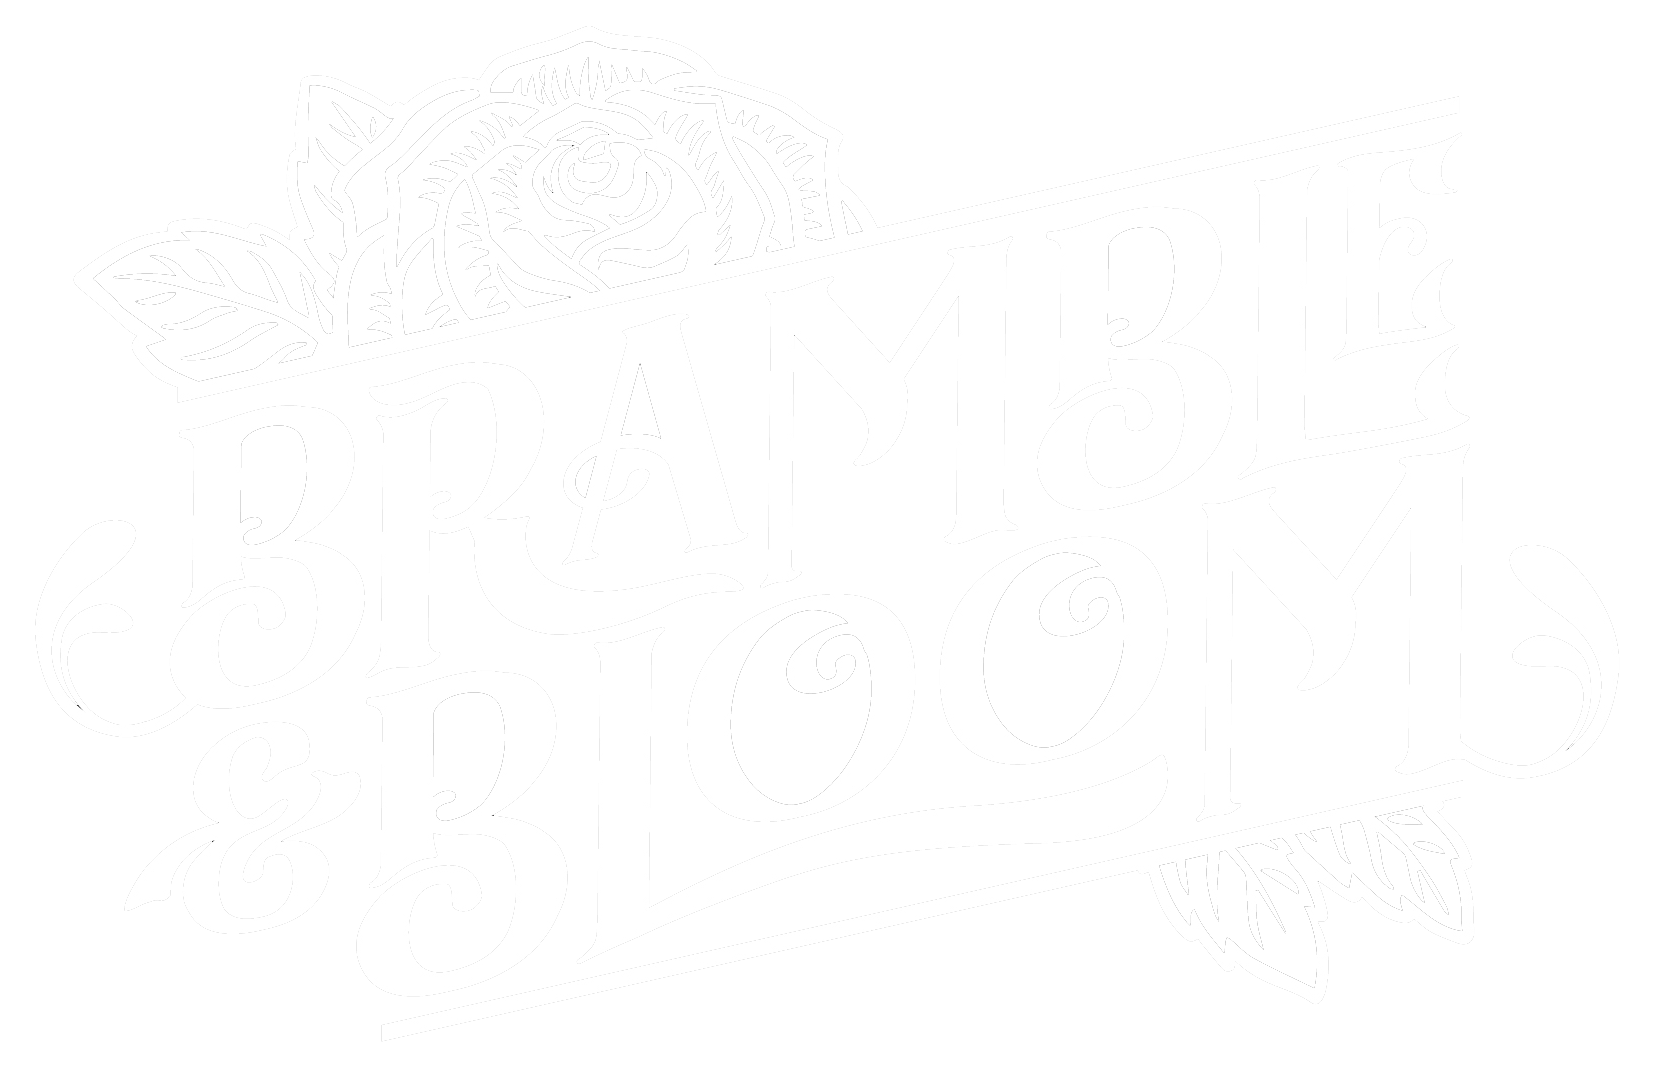 Bramble &amp; Bloom